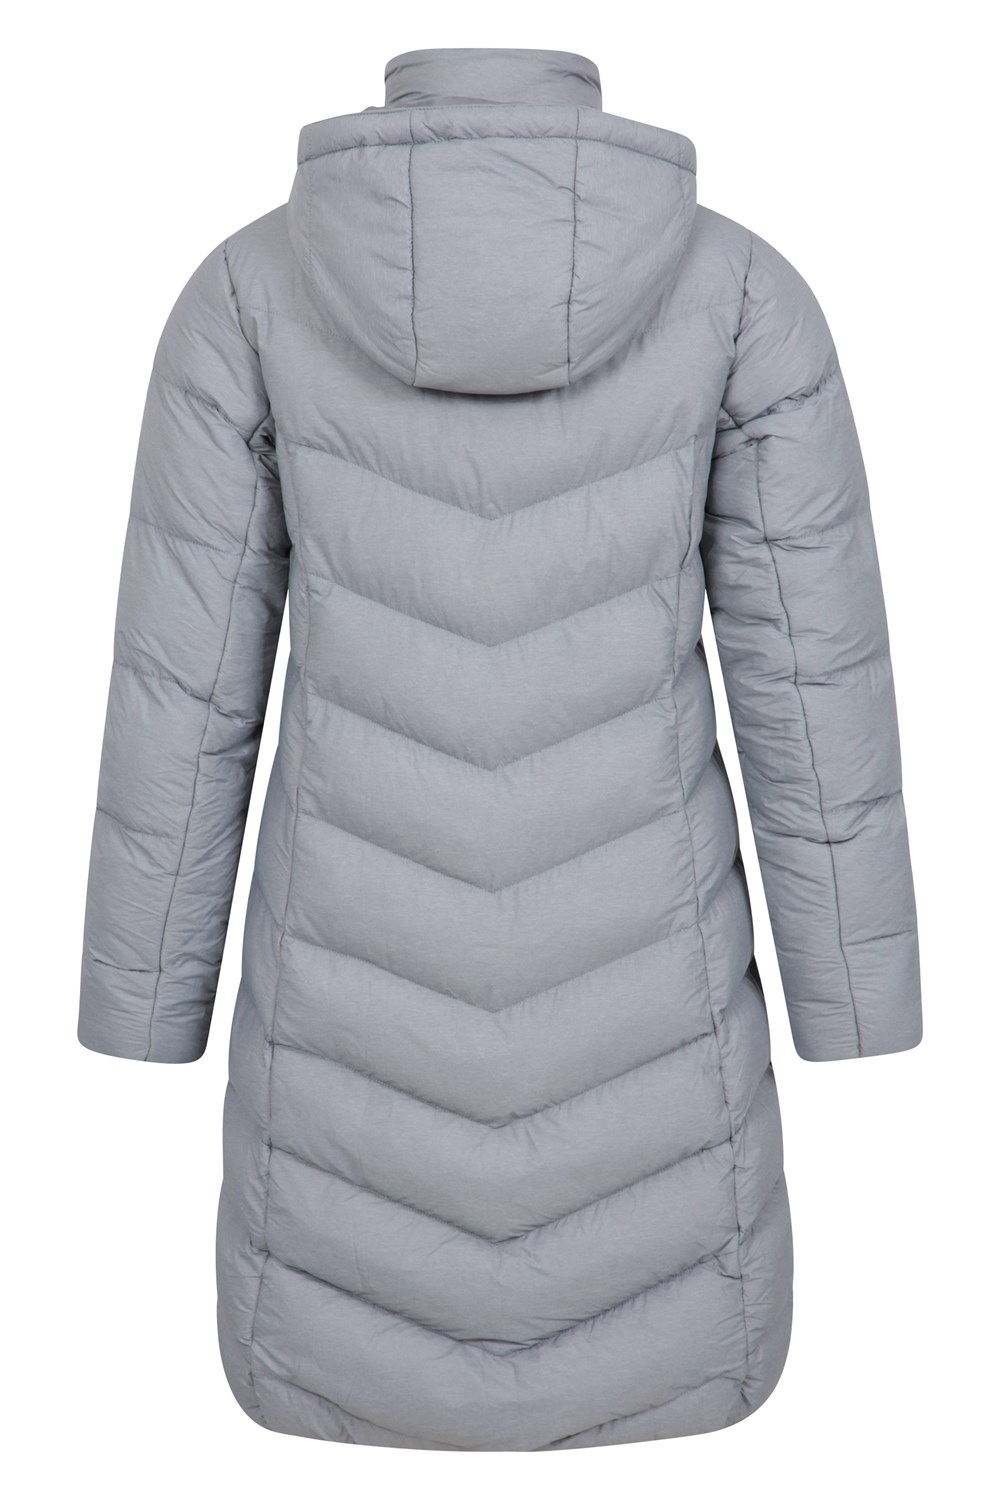 Mountain Warehouse Ladies Long Padded Jacket Water Resistant Winter ...